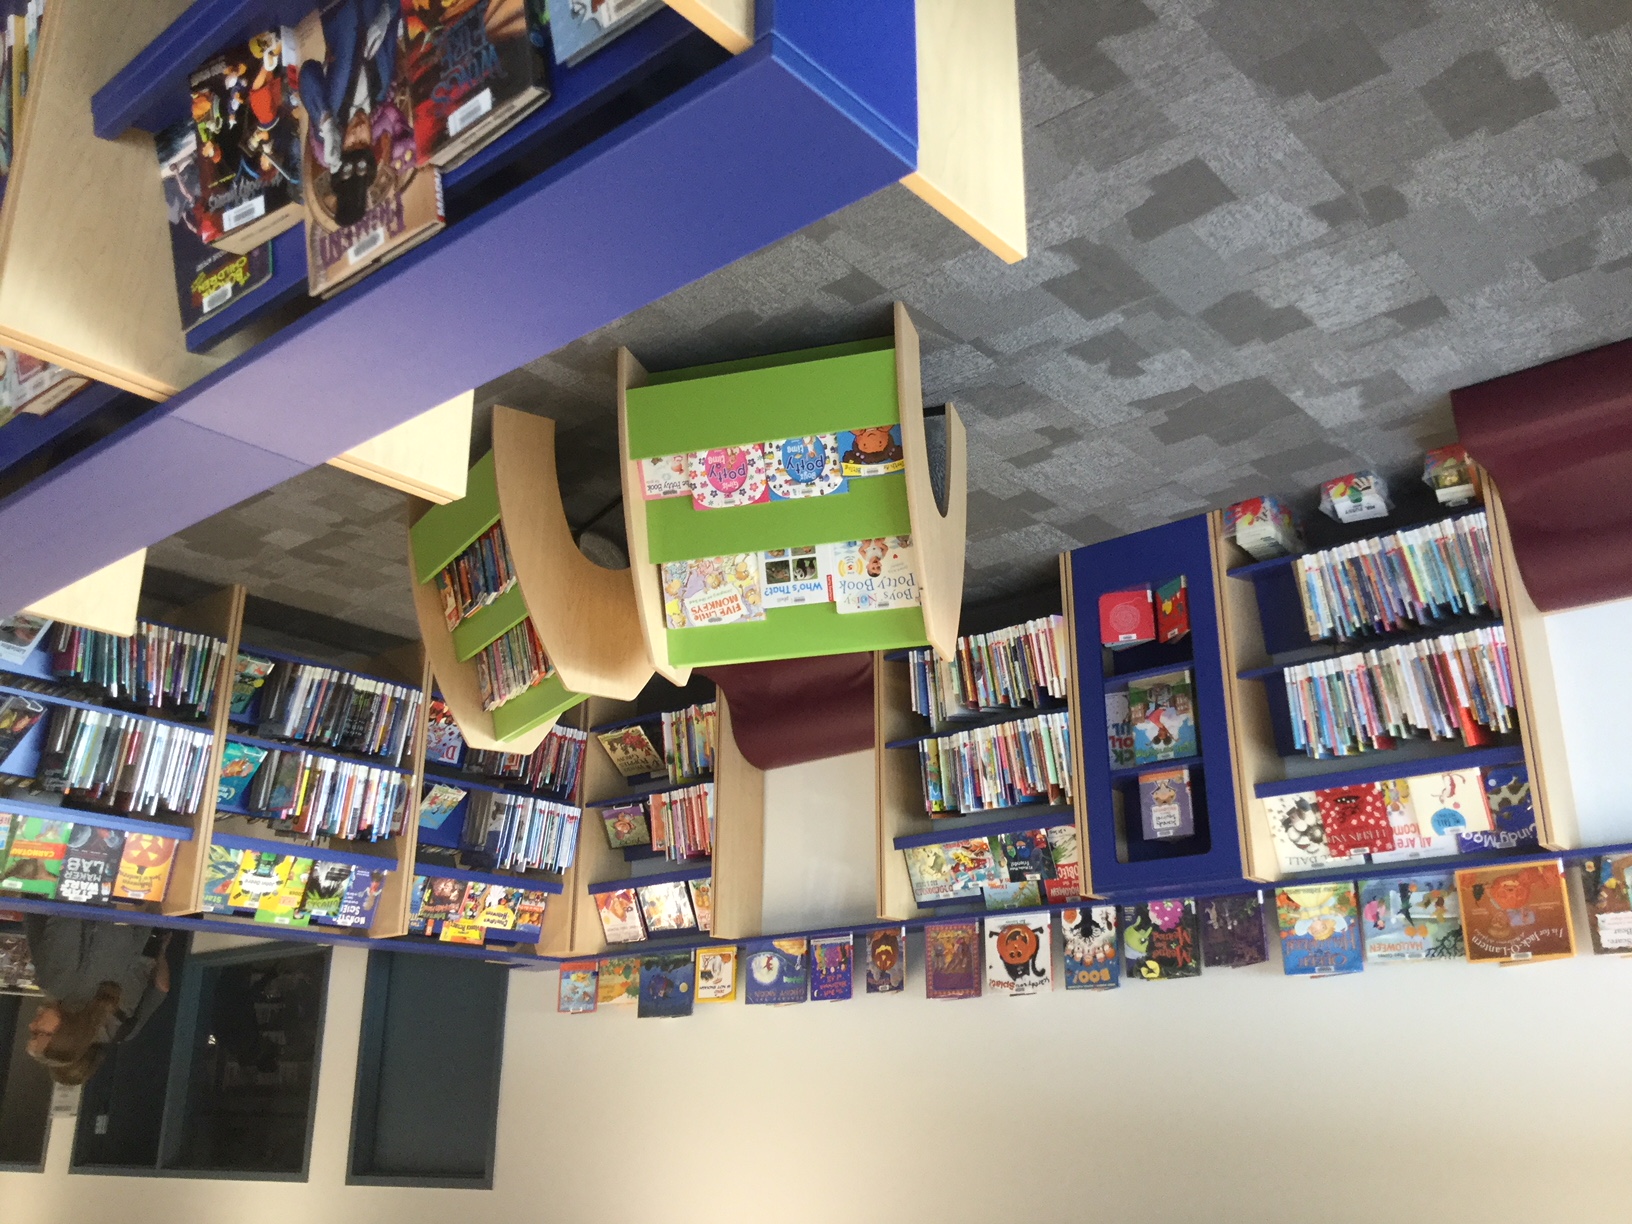 Glencoe Library's children's area